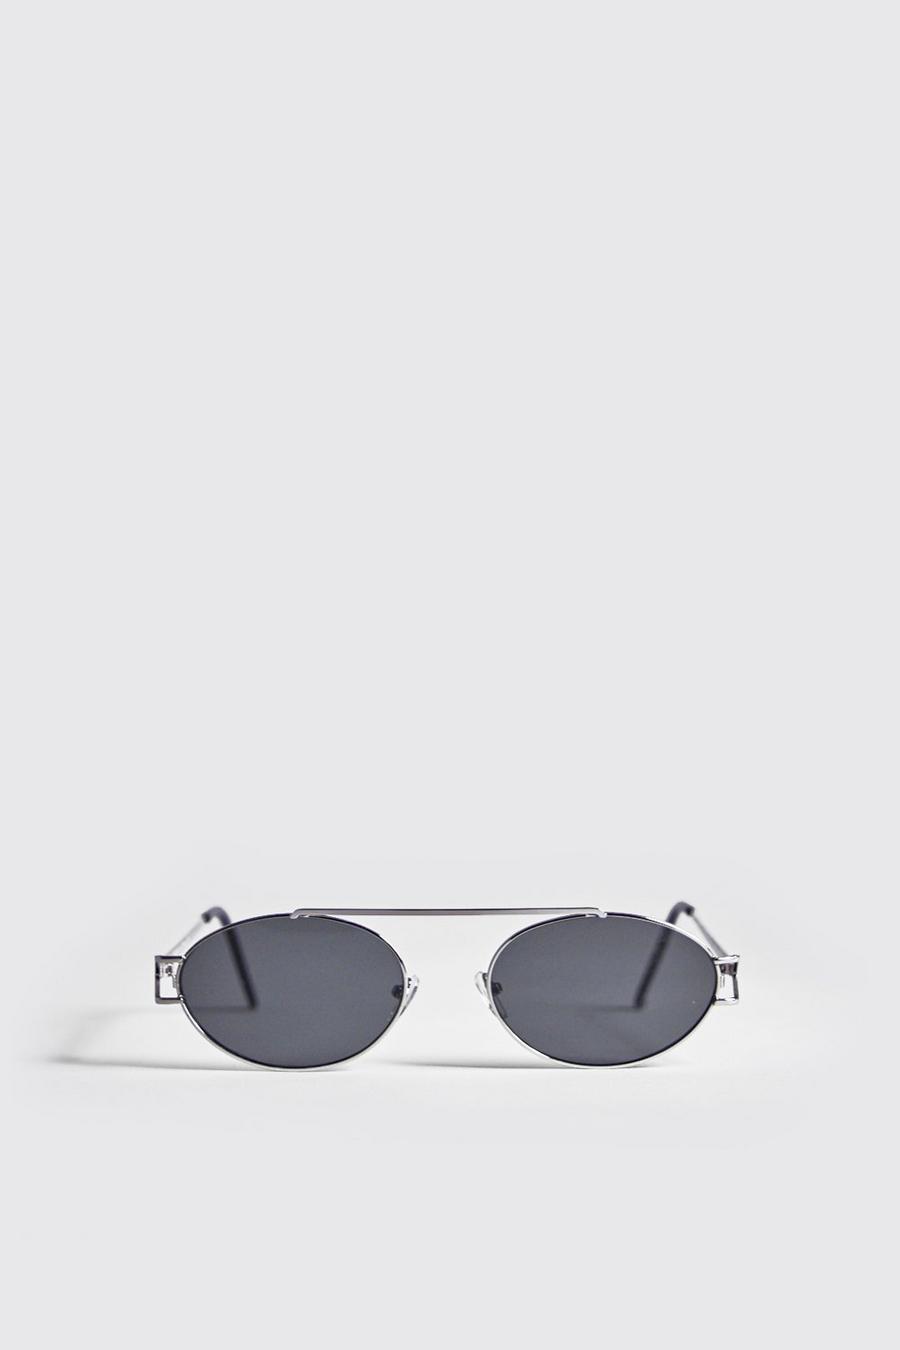 Silver Black Lens Round Metal Frame Sunglasses